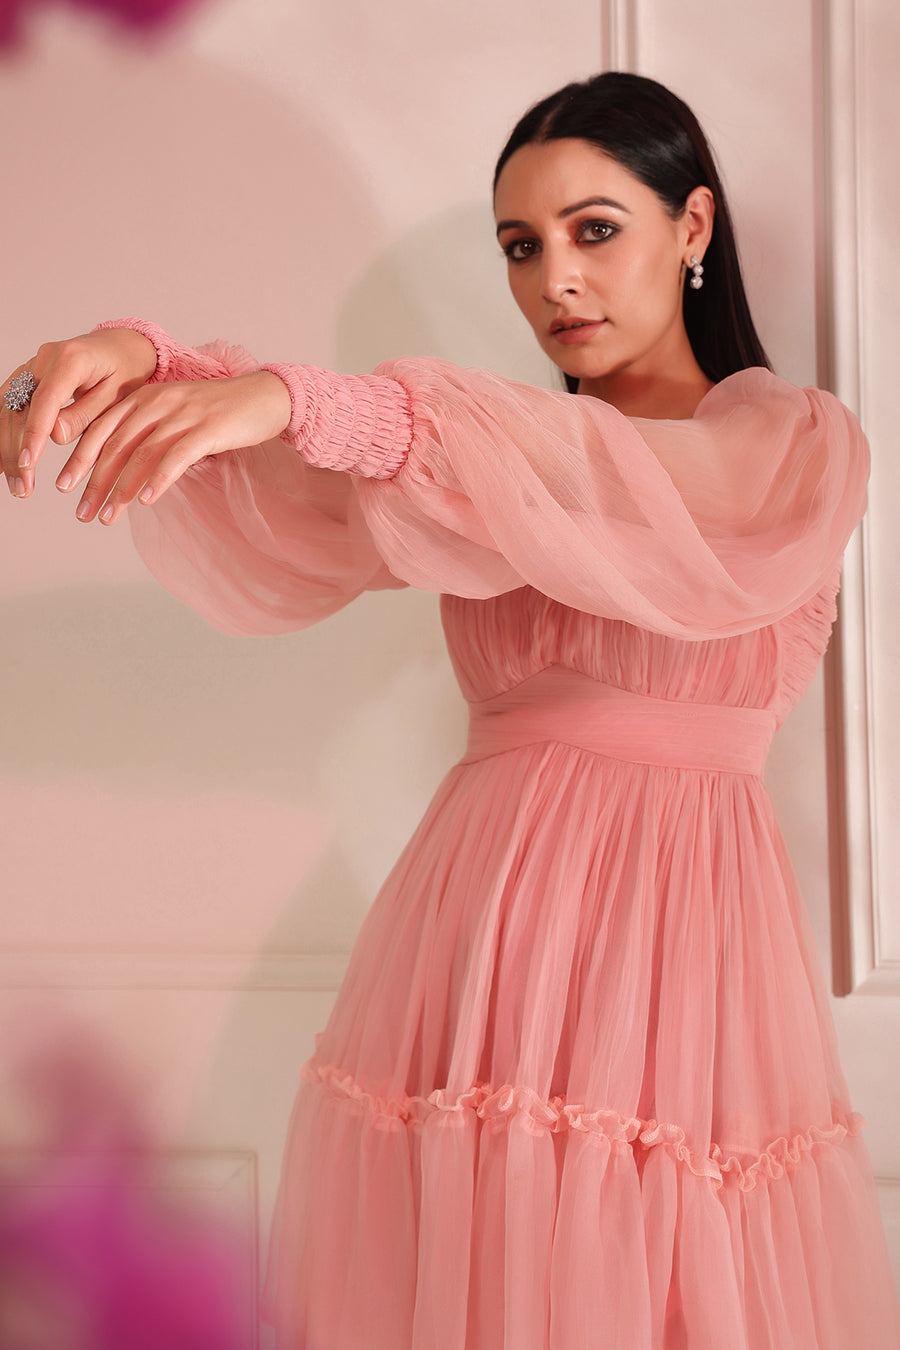 Aria Pink Dress- RTS